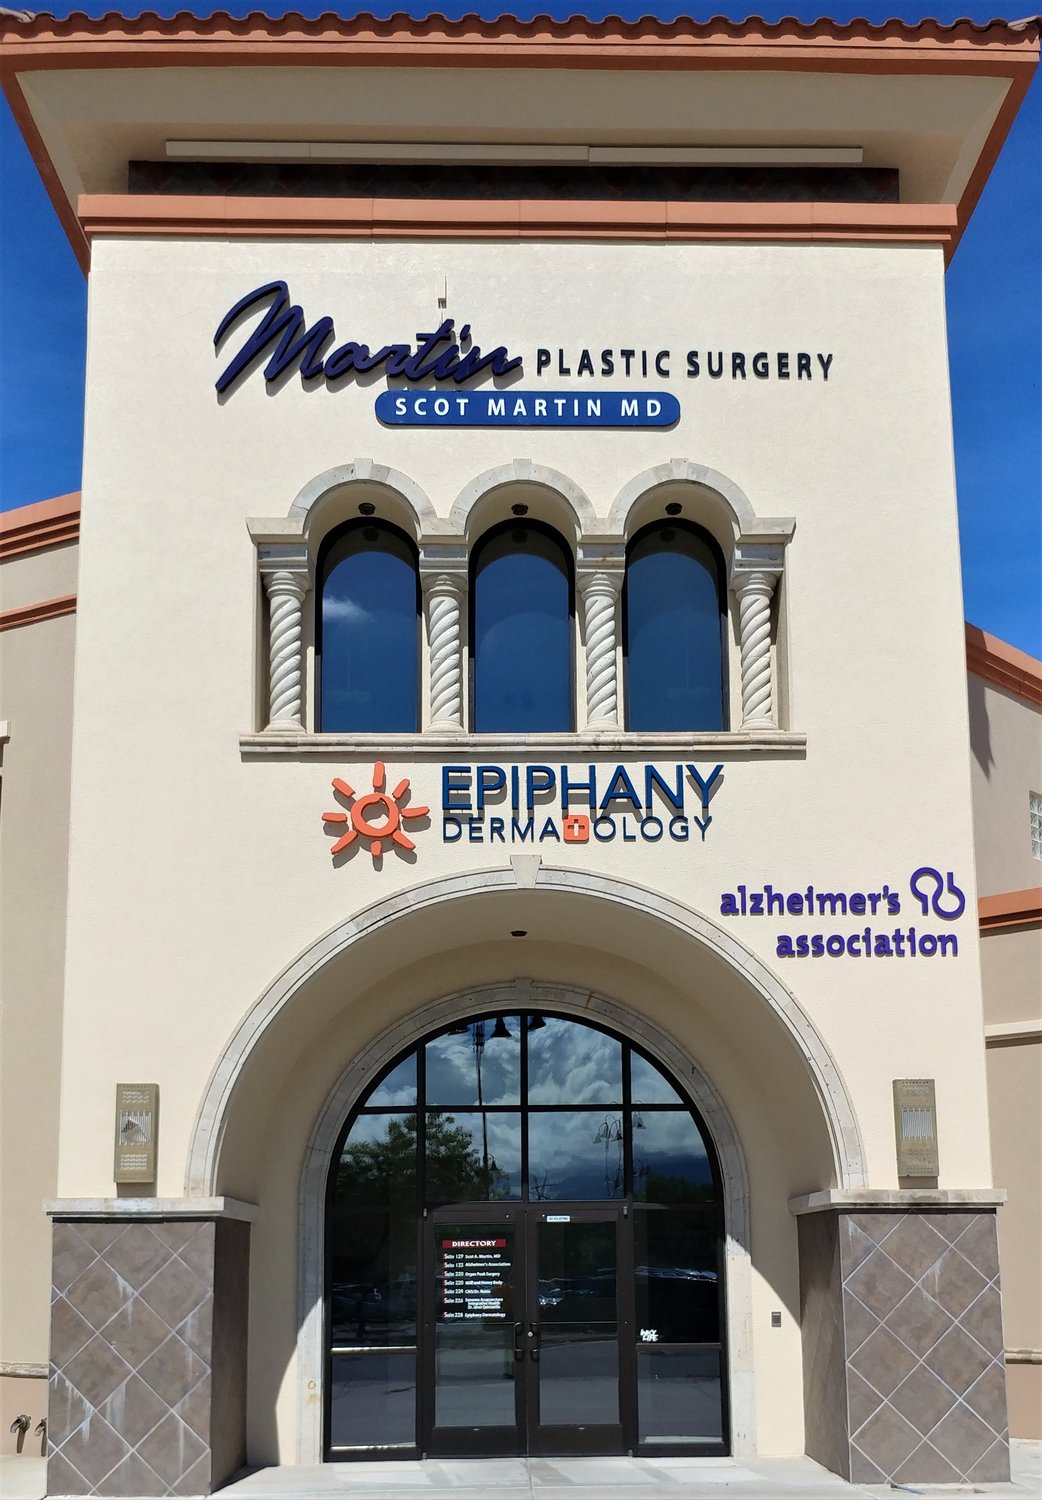 Epiphany Dermatology is located at 141 N. Roadrunner Parkway, Suite 228.